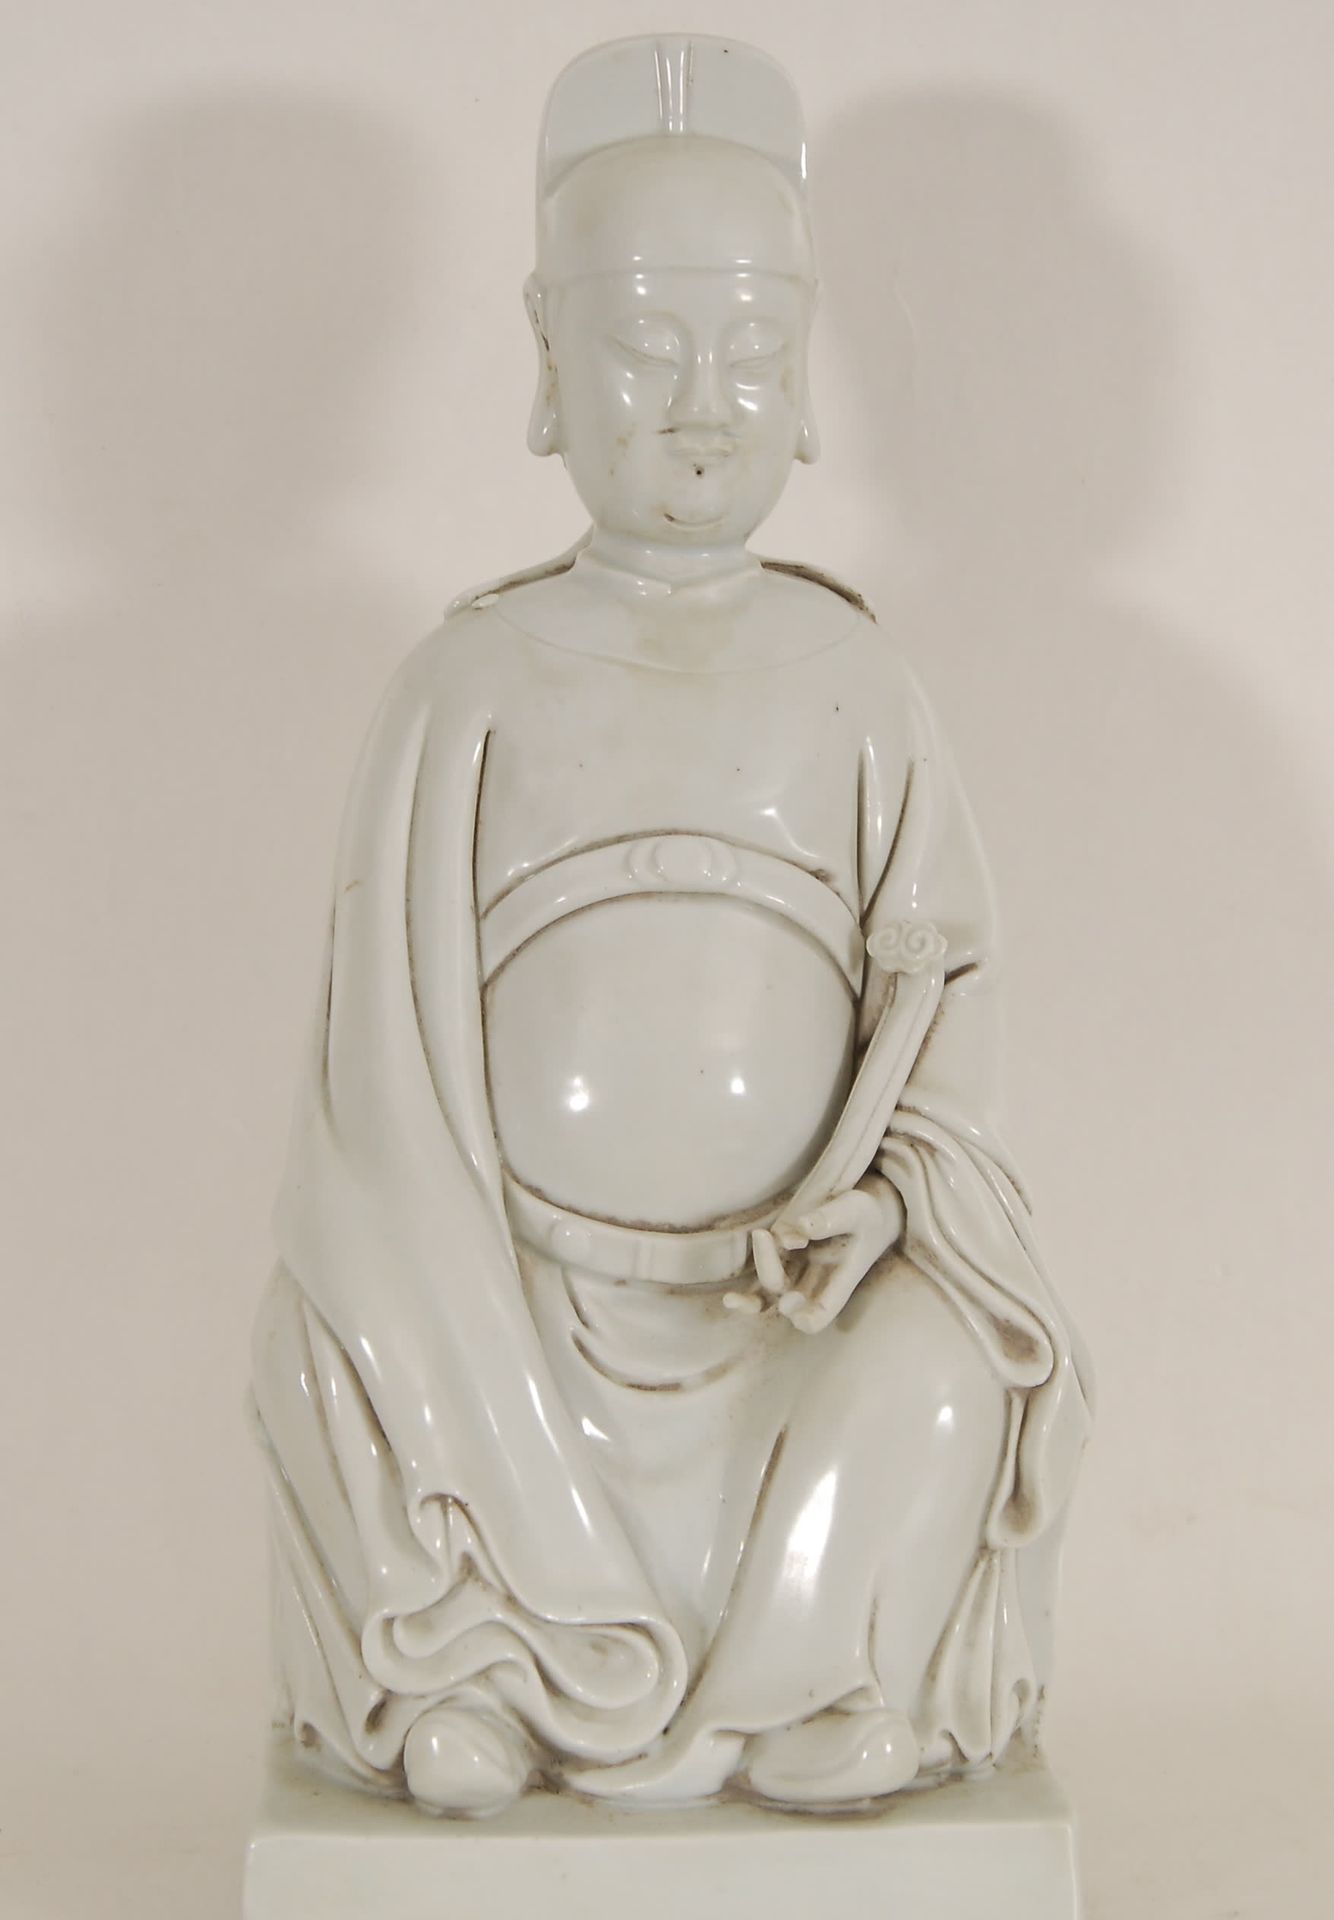 Null Bouddha assis
Blanc de Chine. Dehua (petits manques).
H. 31,5 cm.